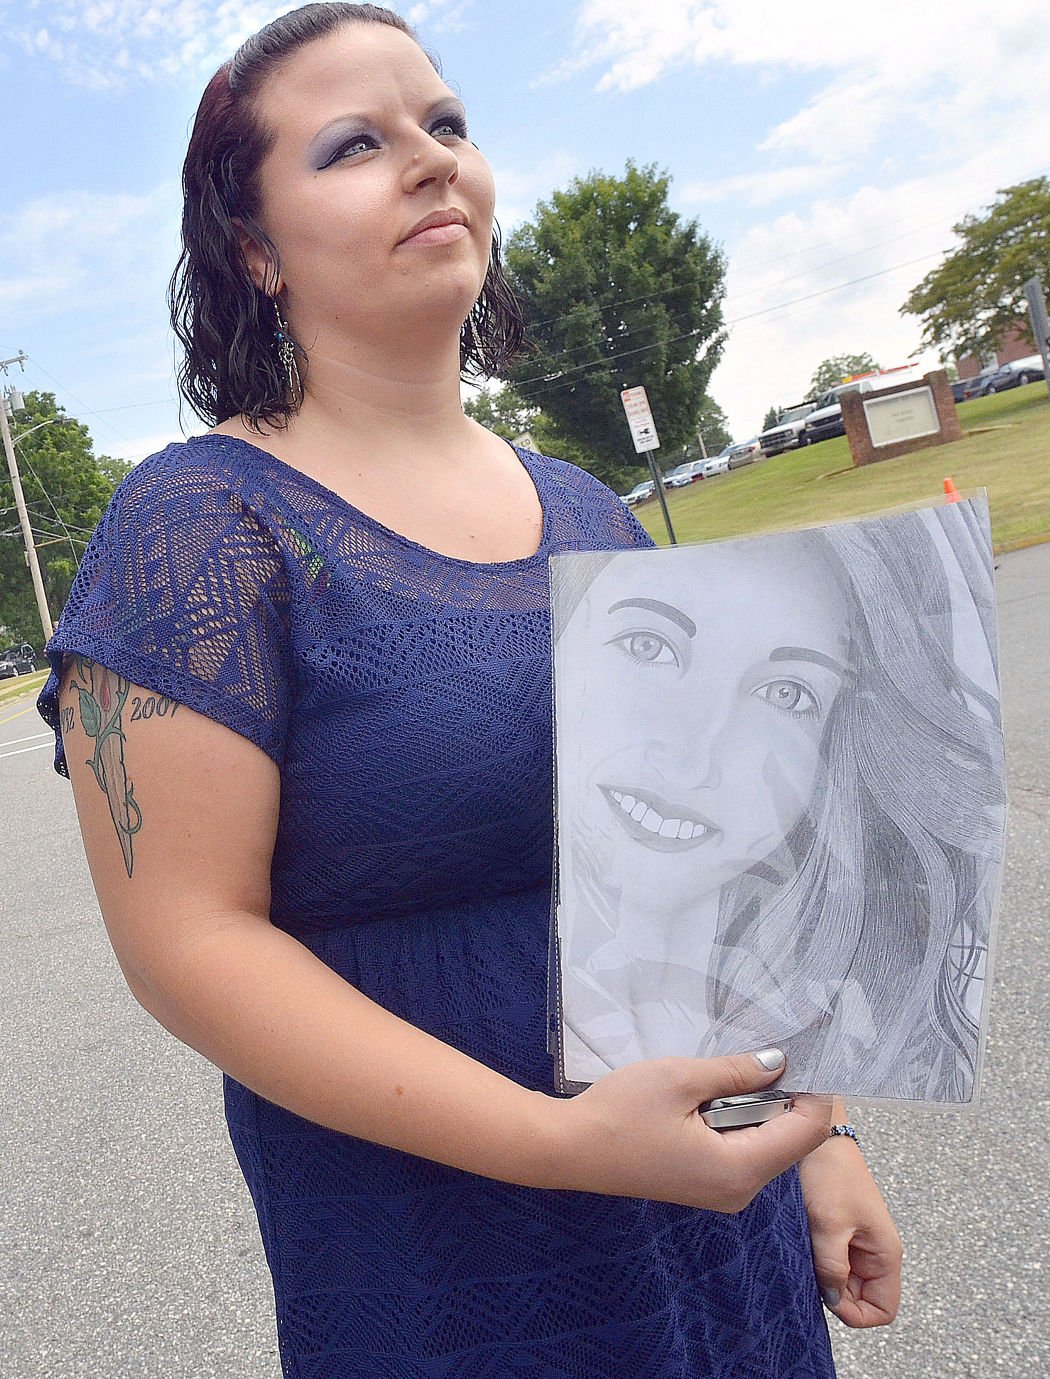 One Year Ago Beloved Educator Maggie Daniels Found Slain Cops